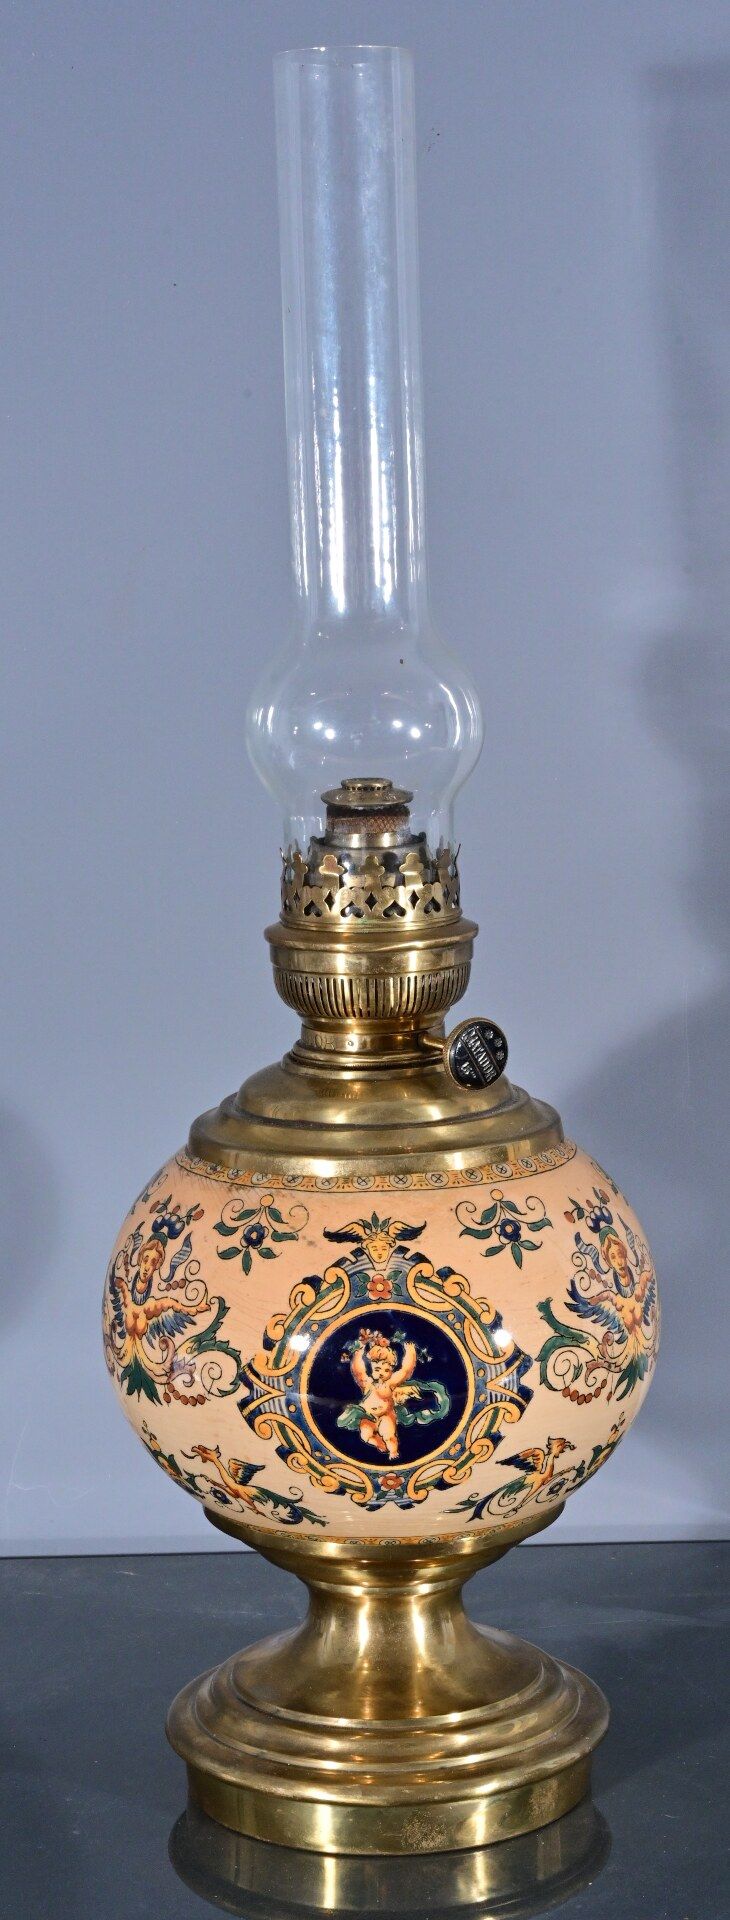 Ältere Petroleumlampe mit "MATADOR" - Brenner, Historismus, 20. Jhdt. Schöner, liebevoll gepflegter